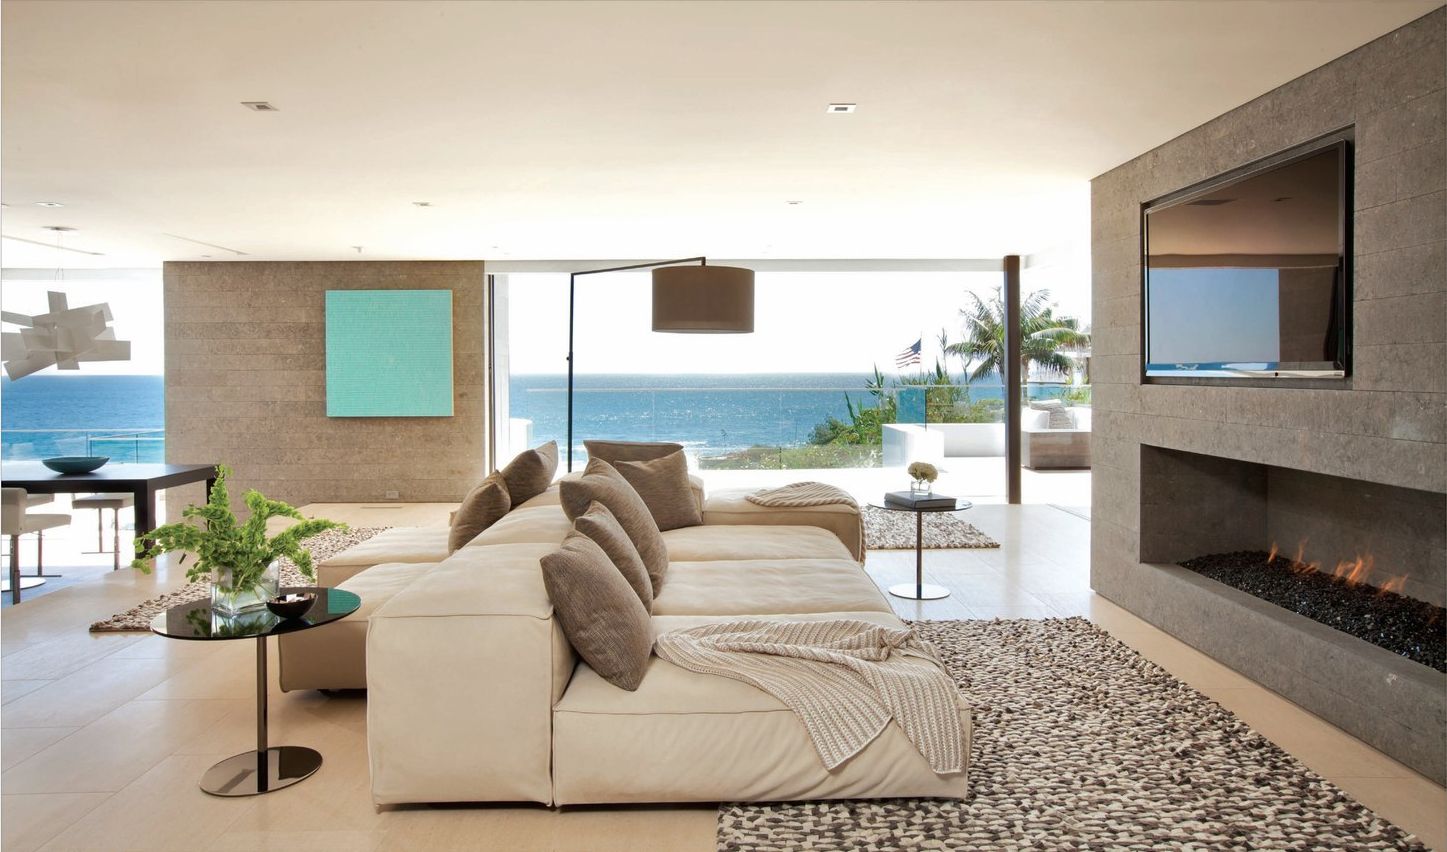 Beach Theme Minimalist Living Room Decorations